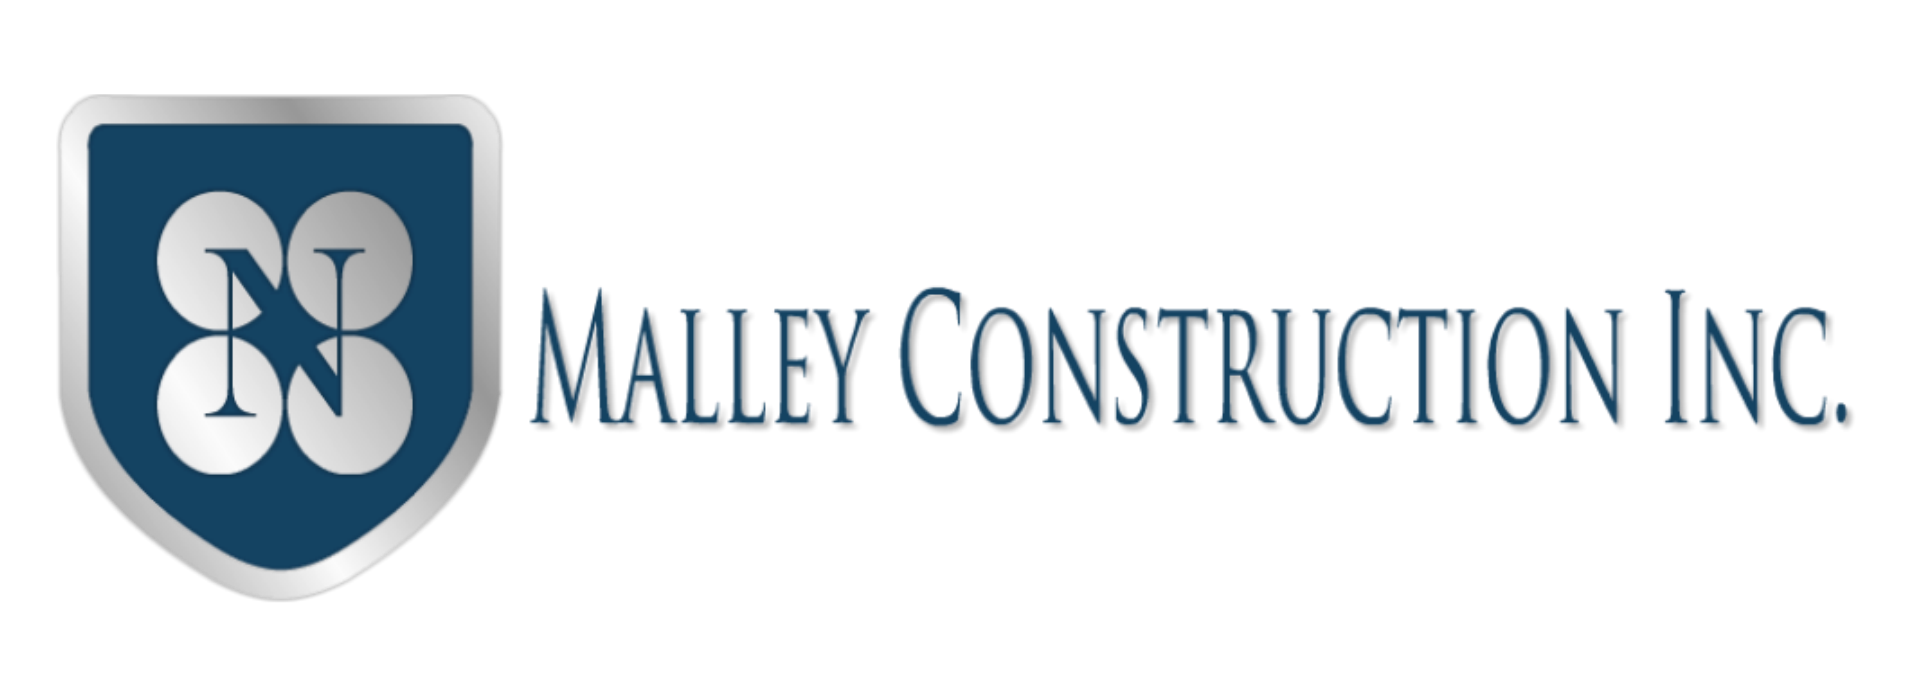 N. Malley Construction, Inc